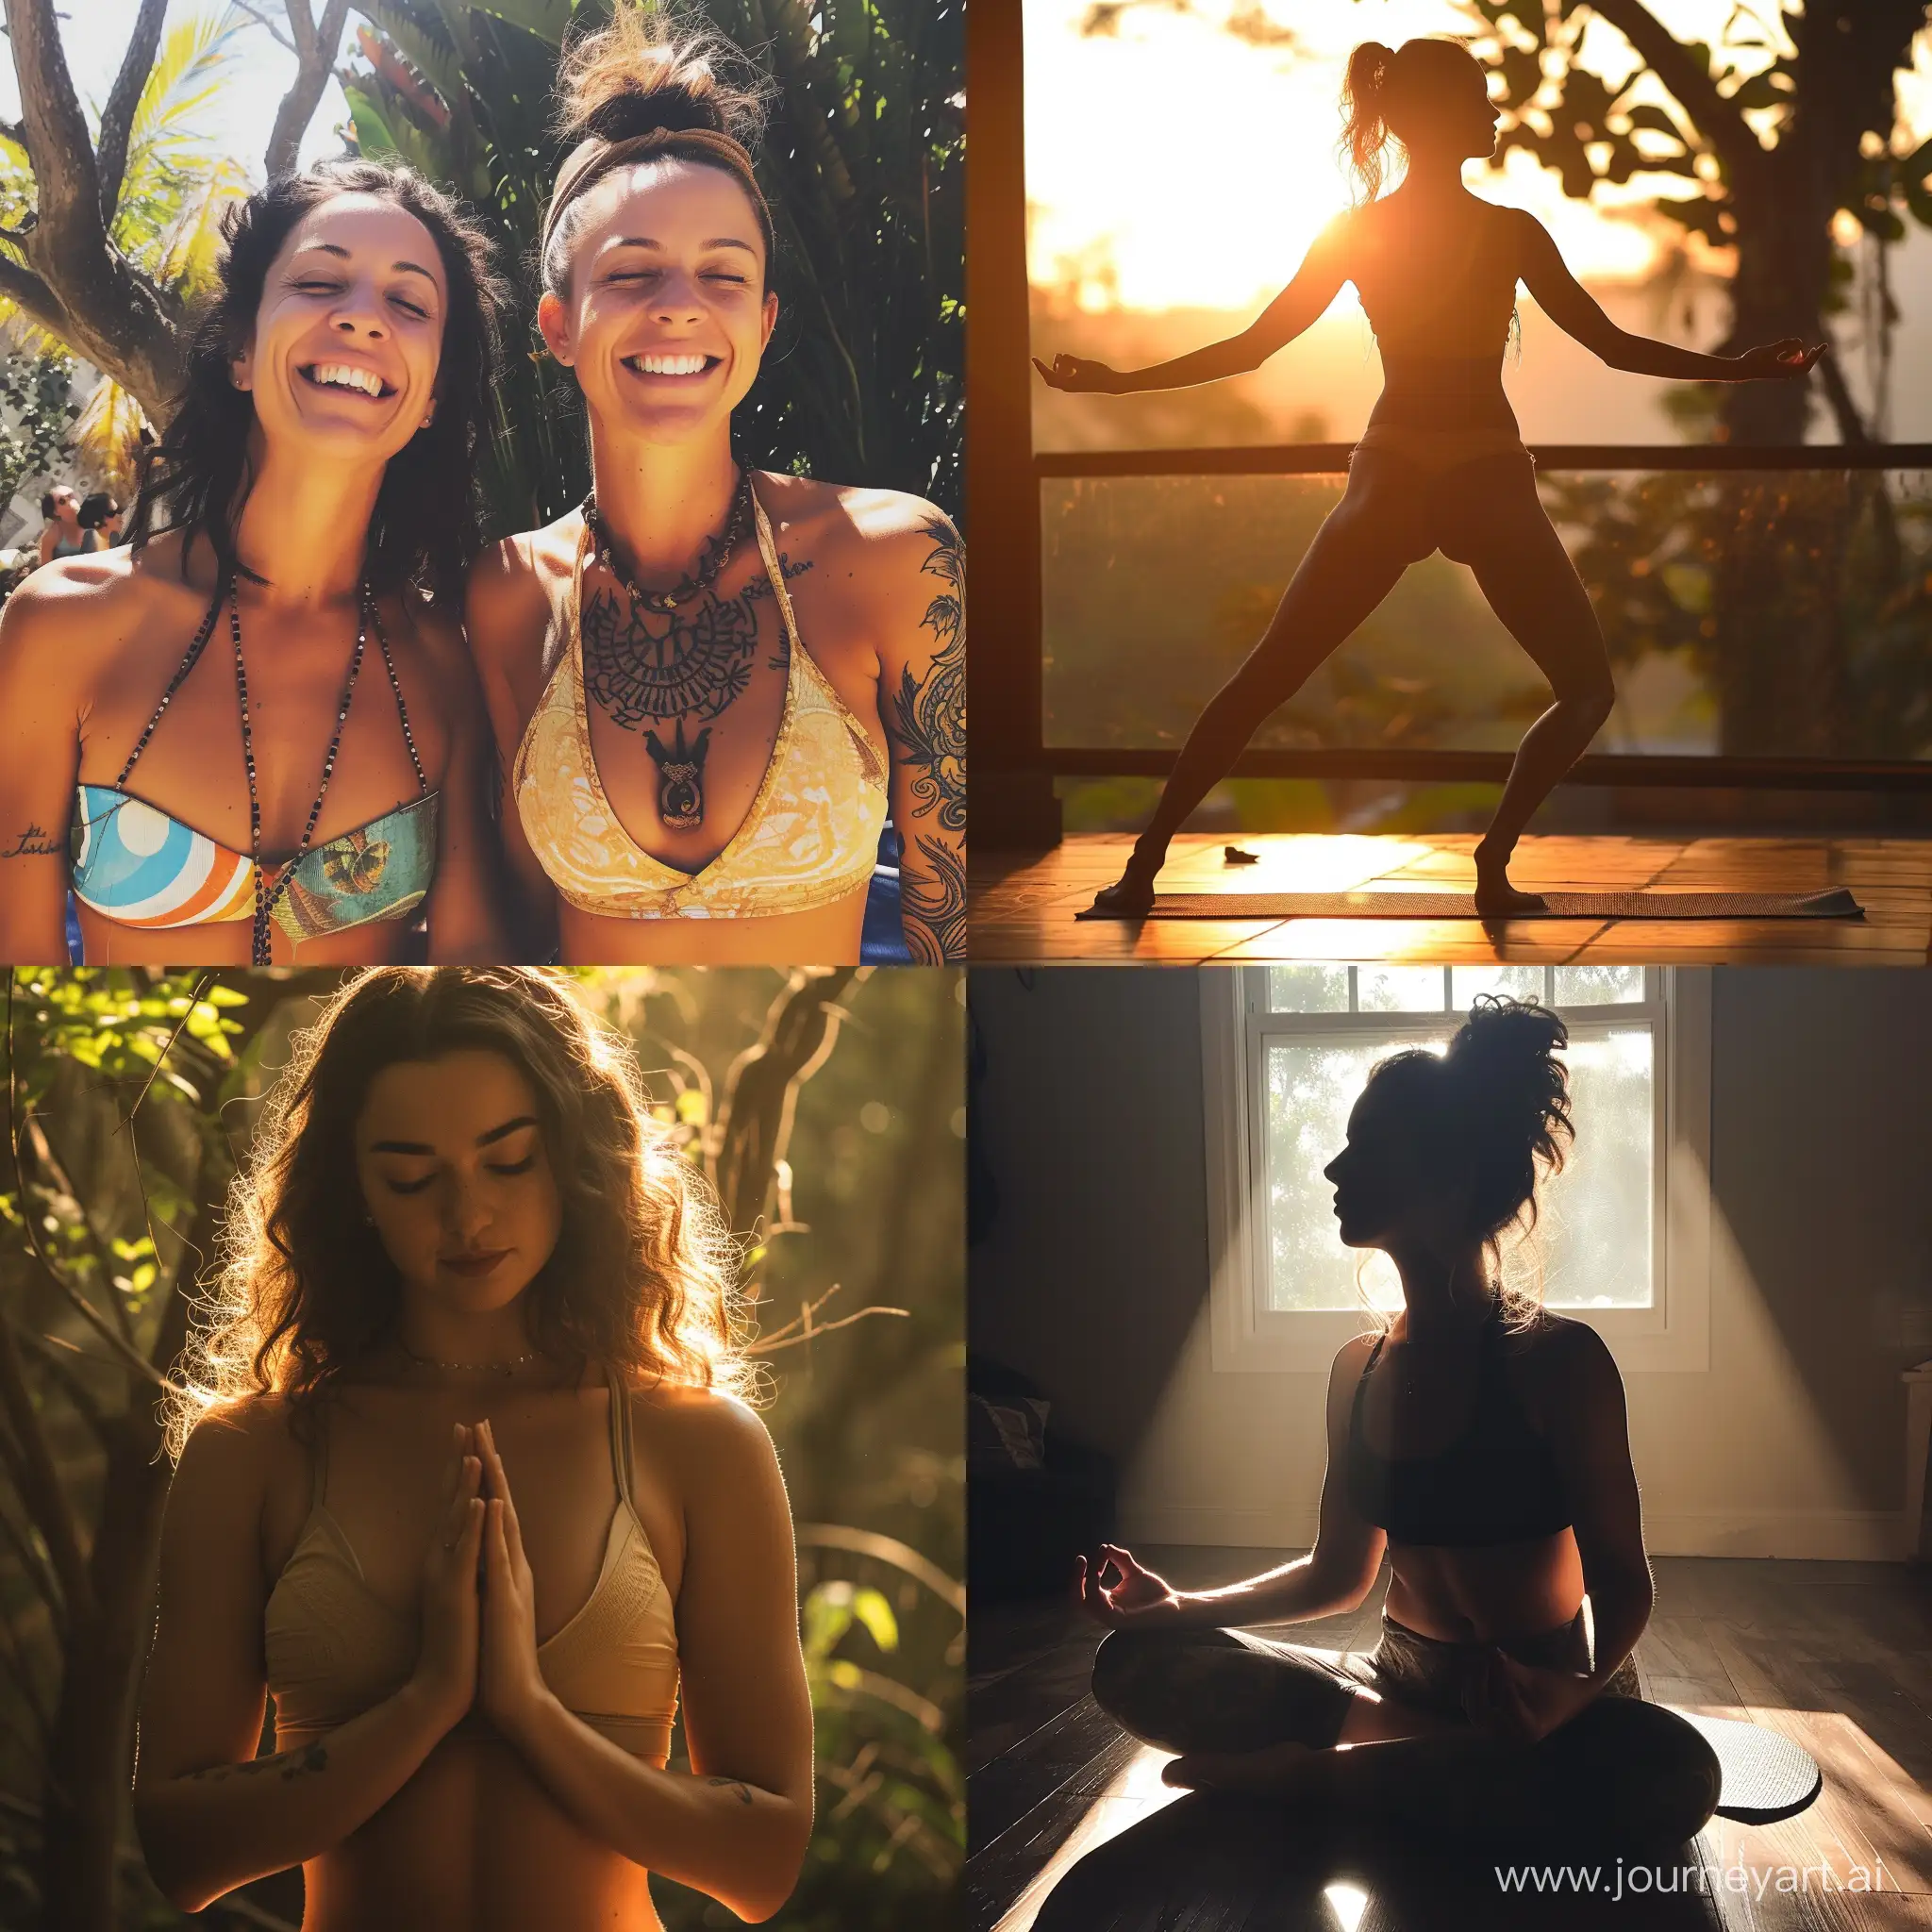 Vibrant-Yoga-Women-Enjoying-Sunshine-in-a-Sexy-Setting